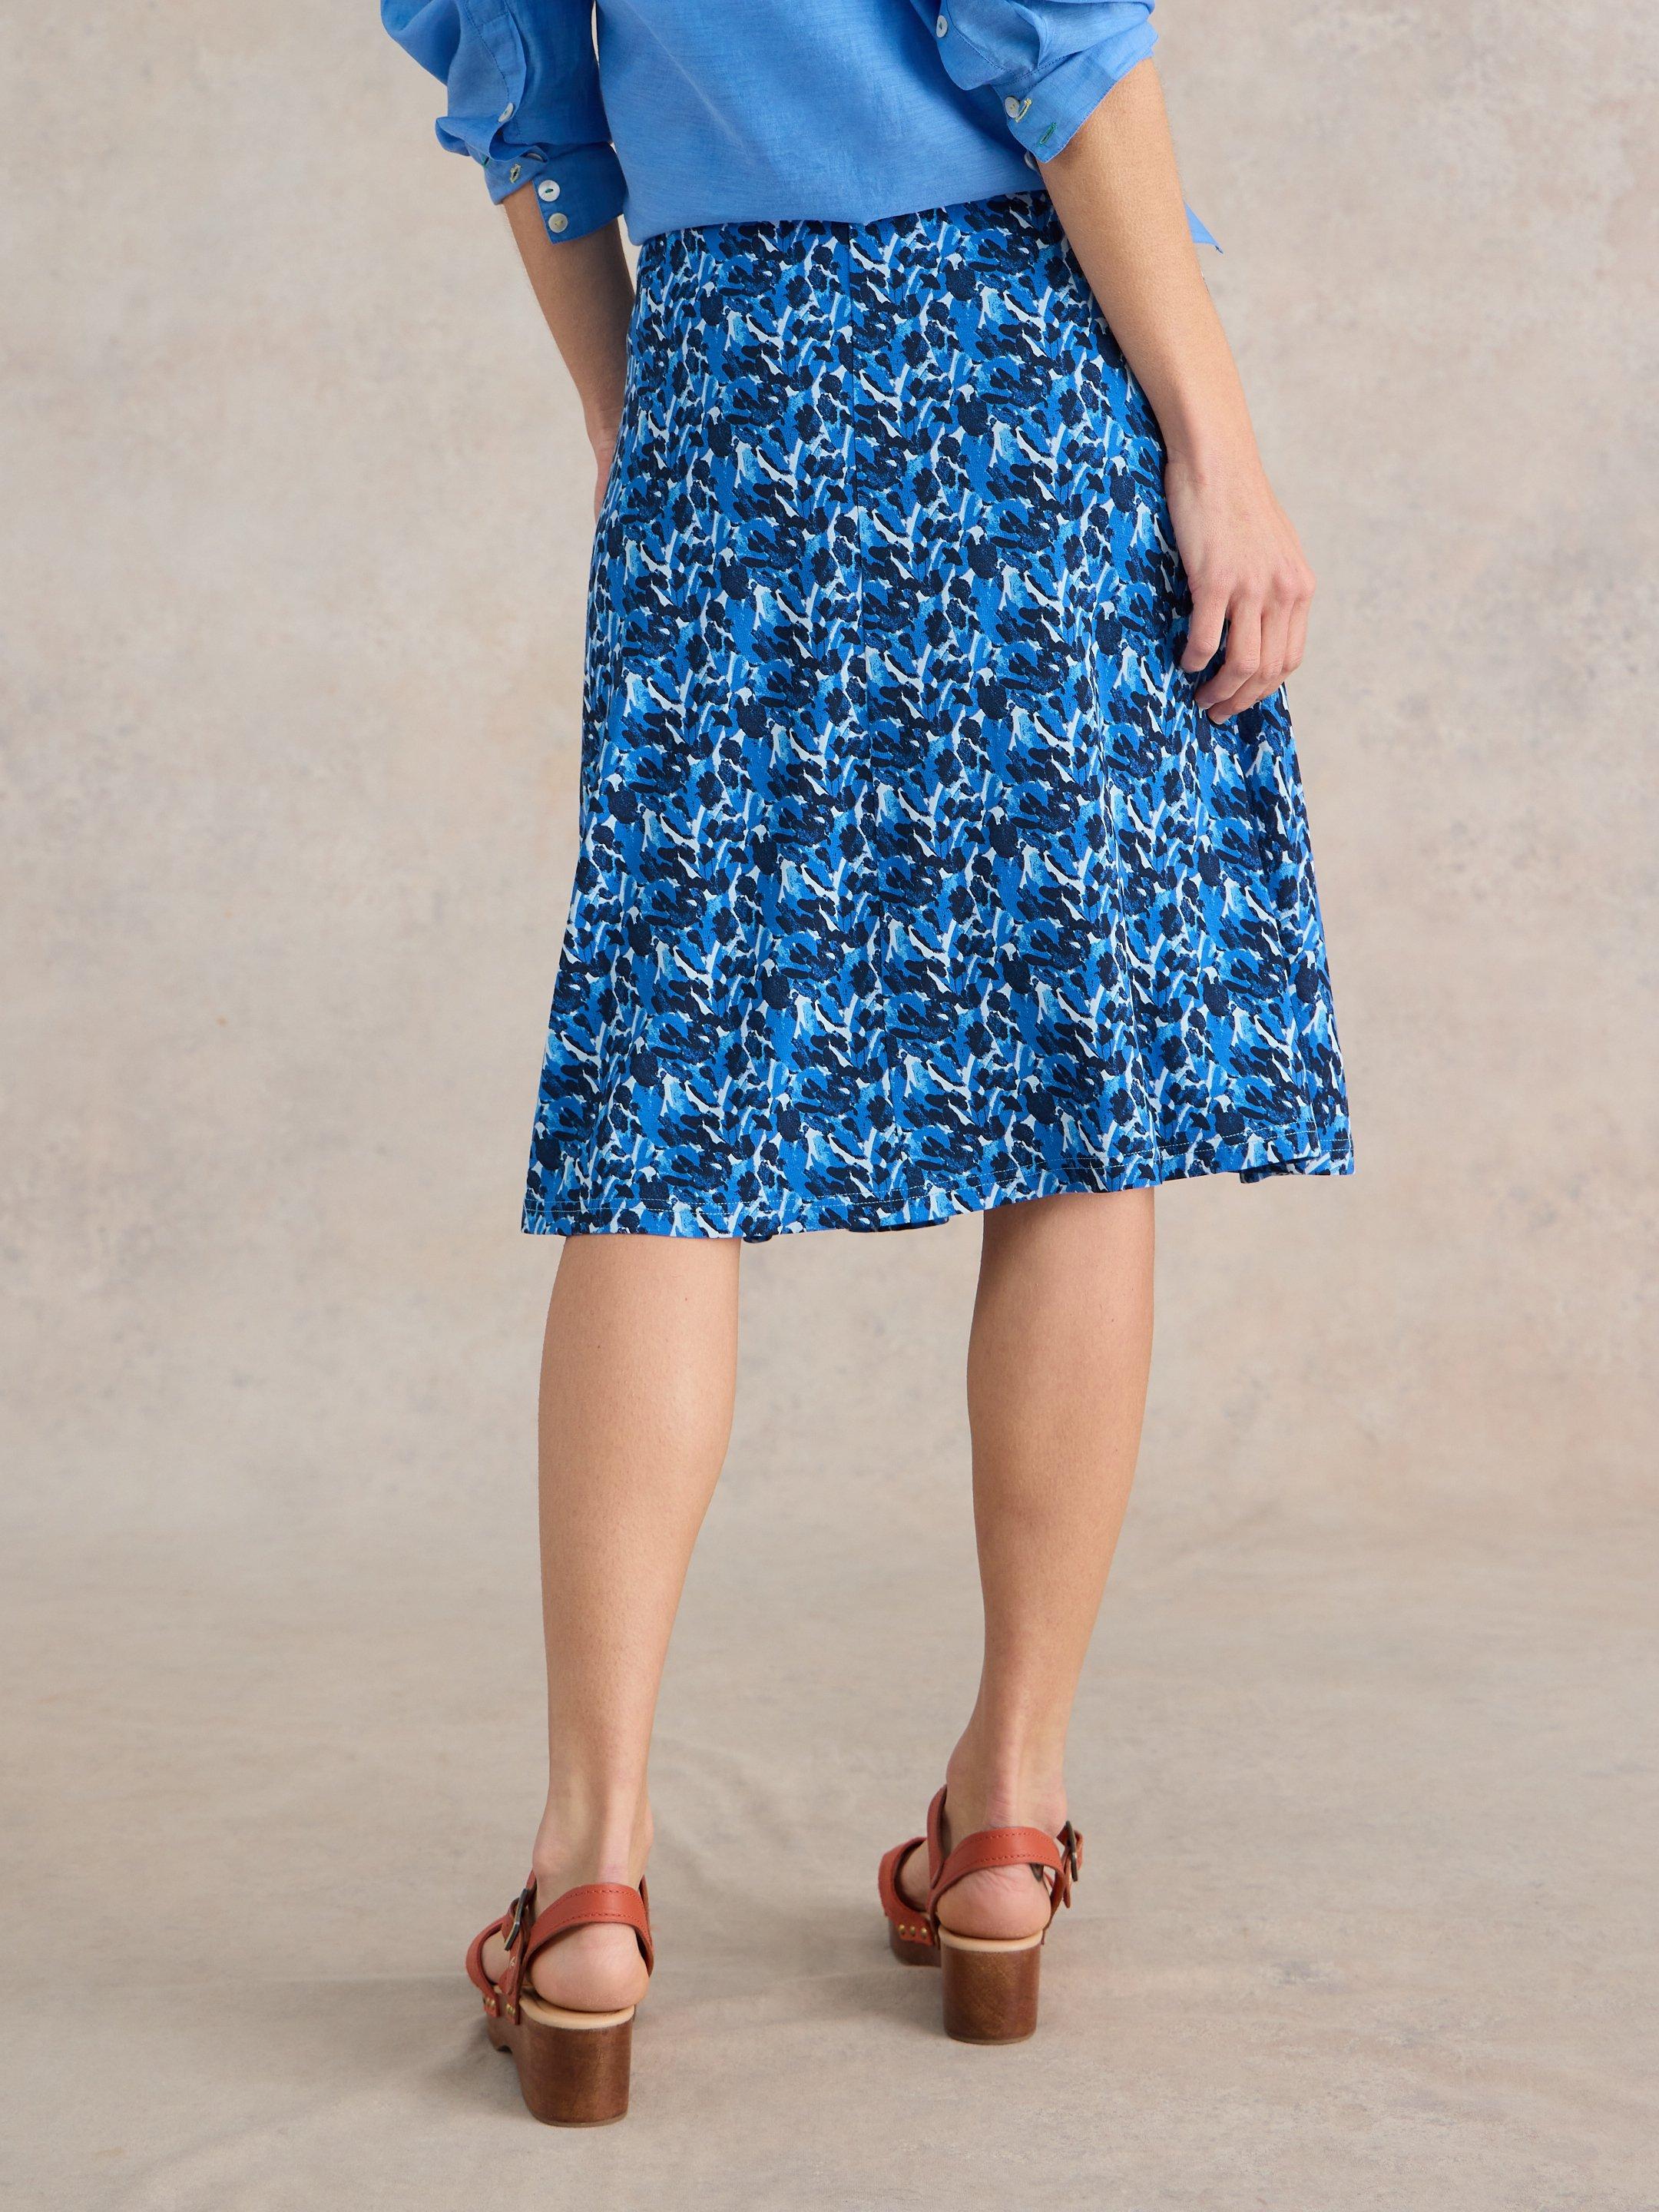 Jade Eco Vero Jersey Skirt in BLUE PR - MODEL BACK